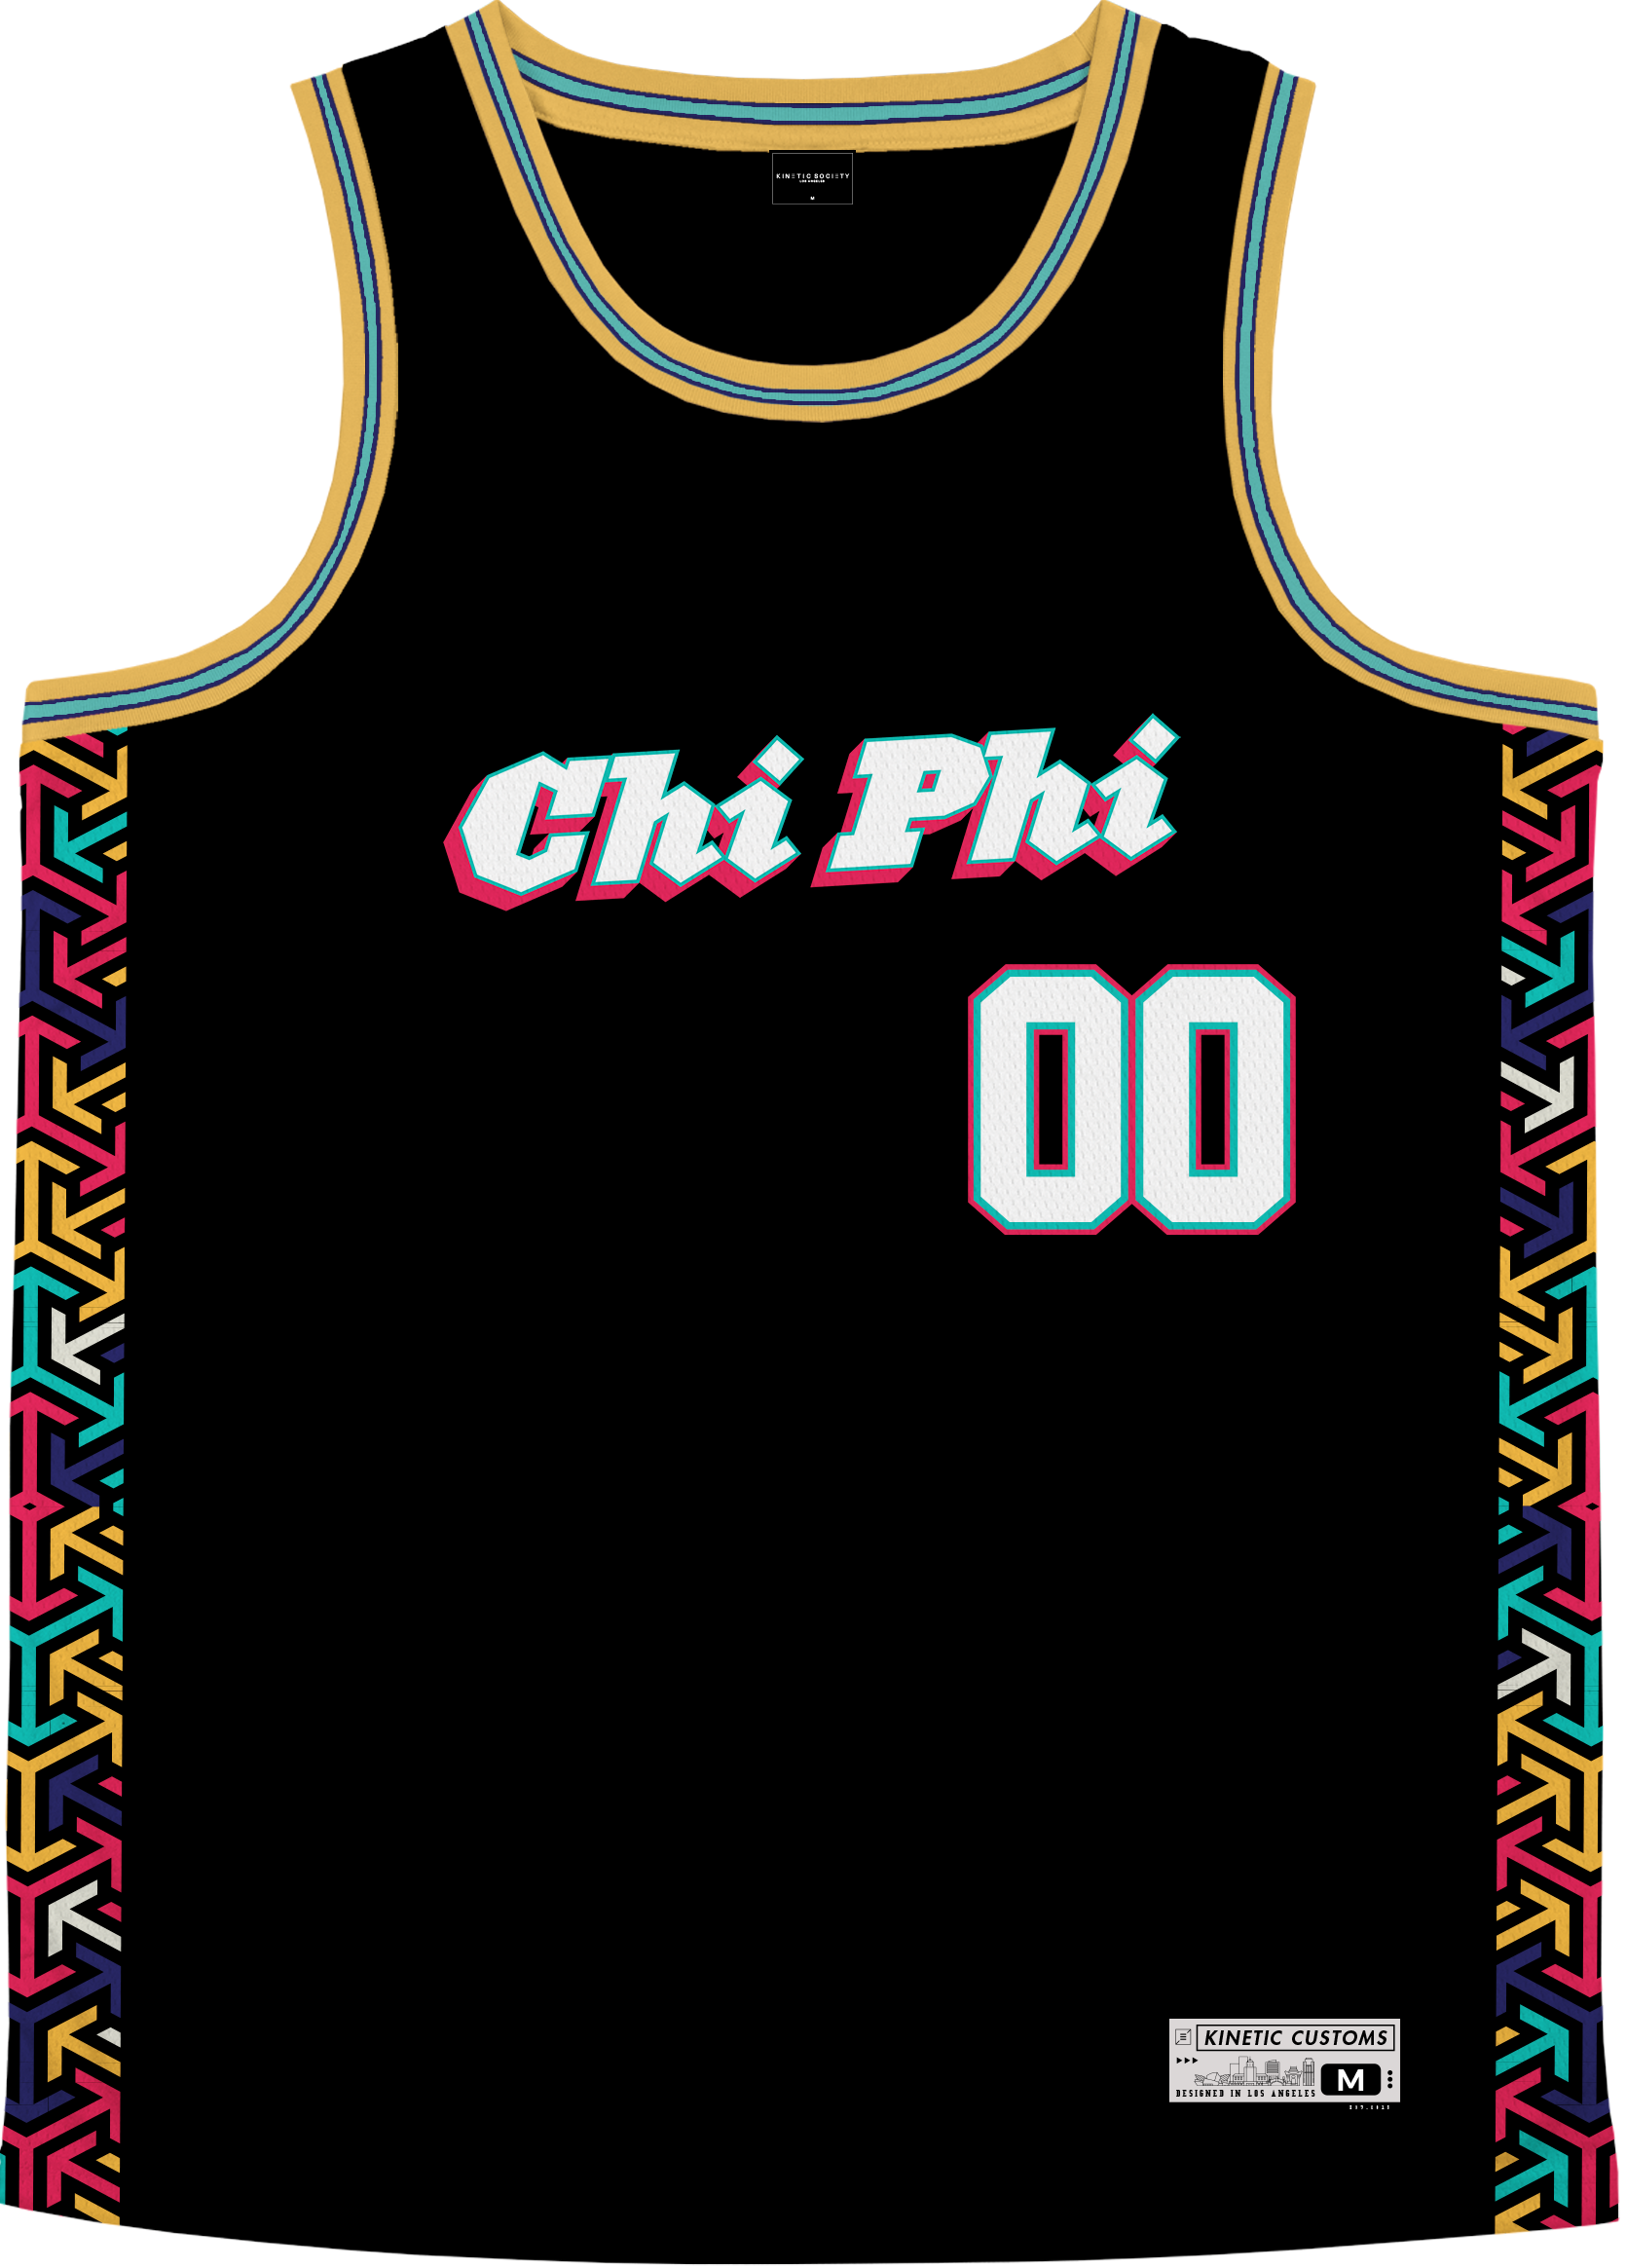 CHI PHI - Cubic Arrow Basketball Jersey